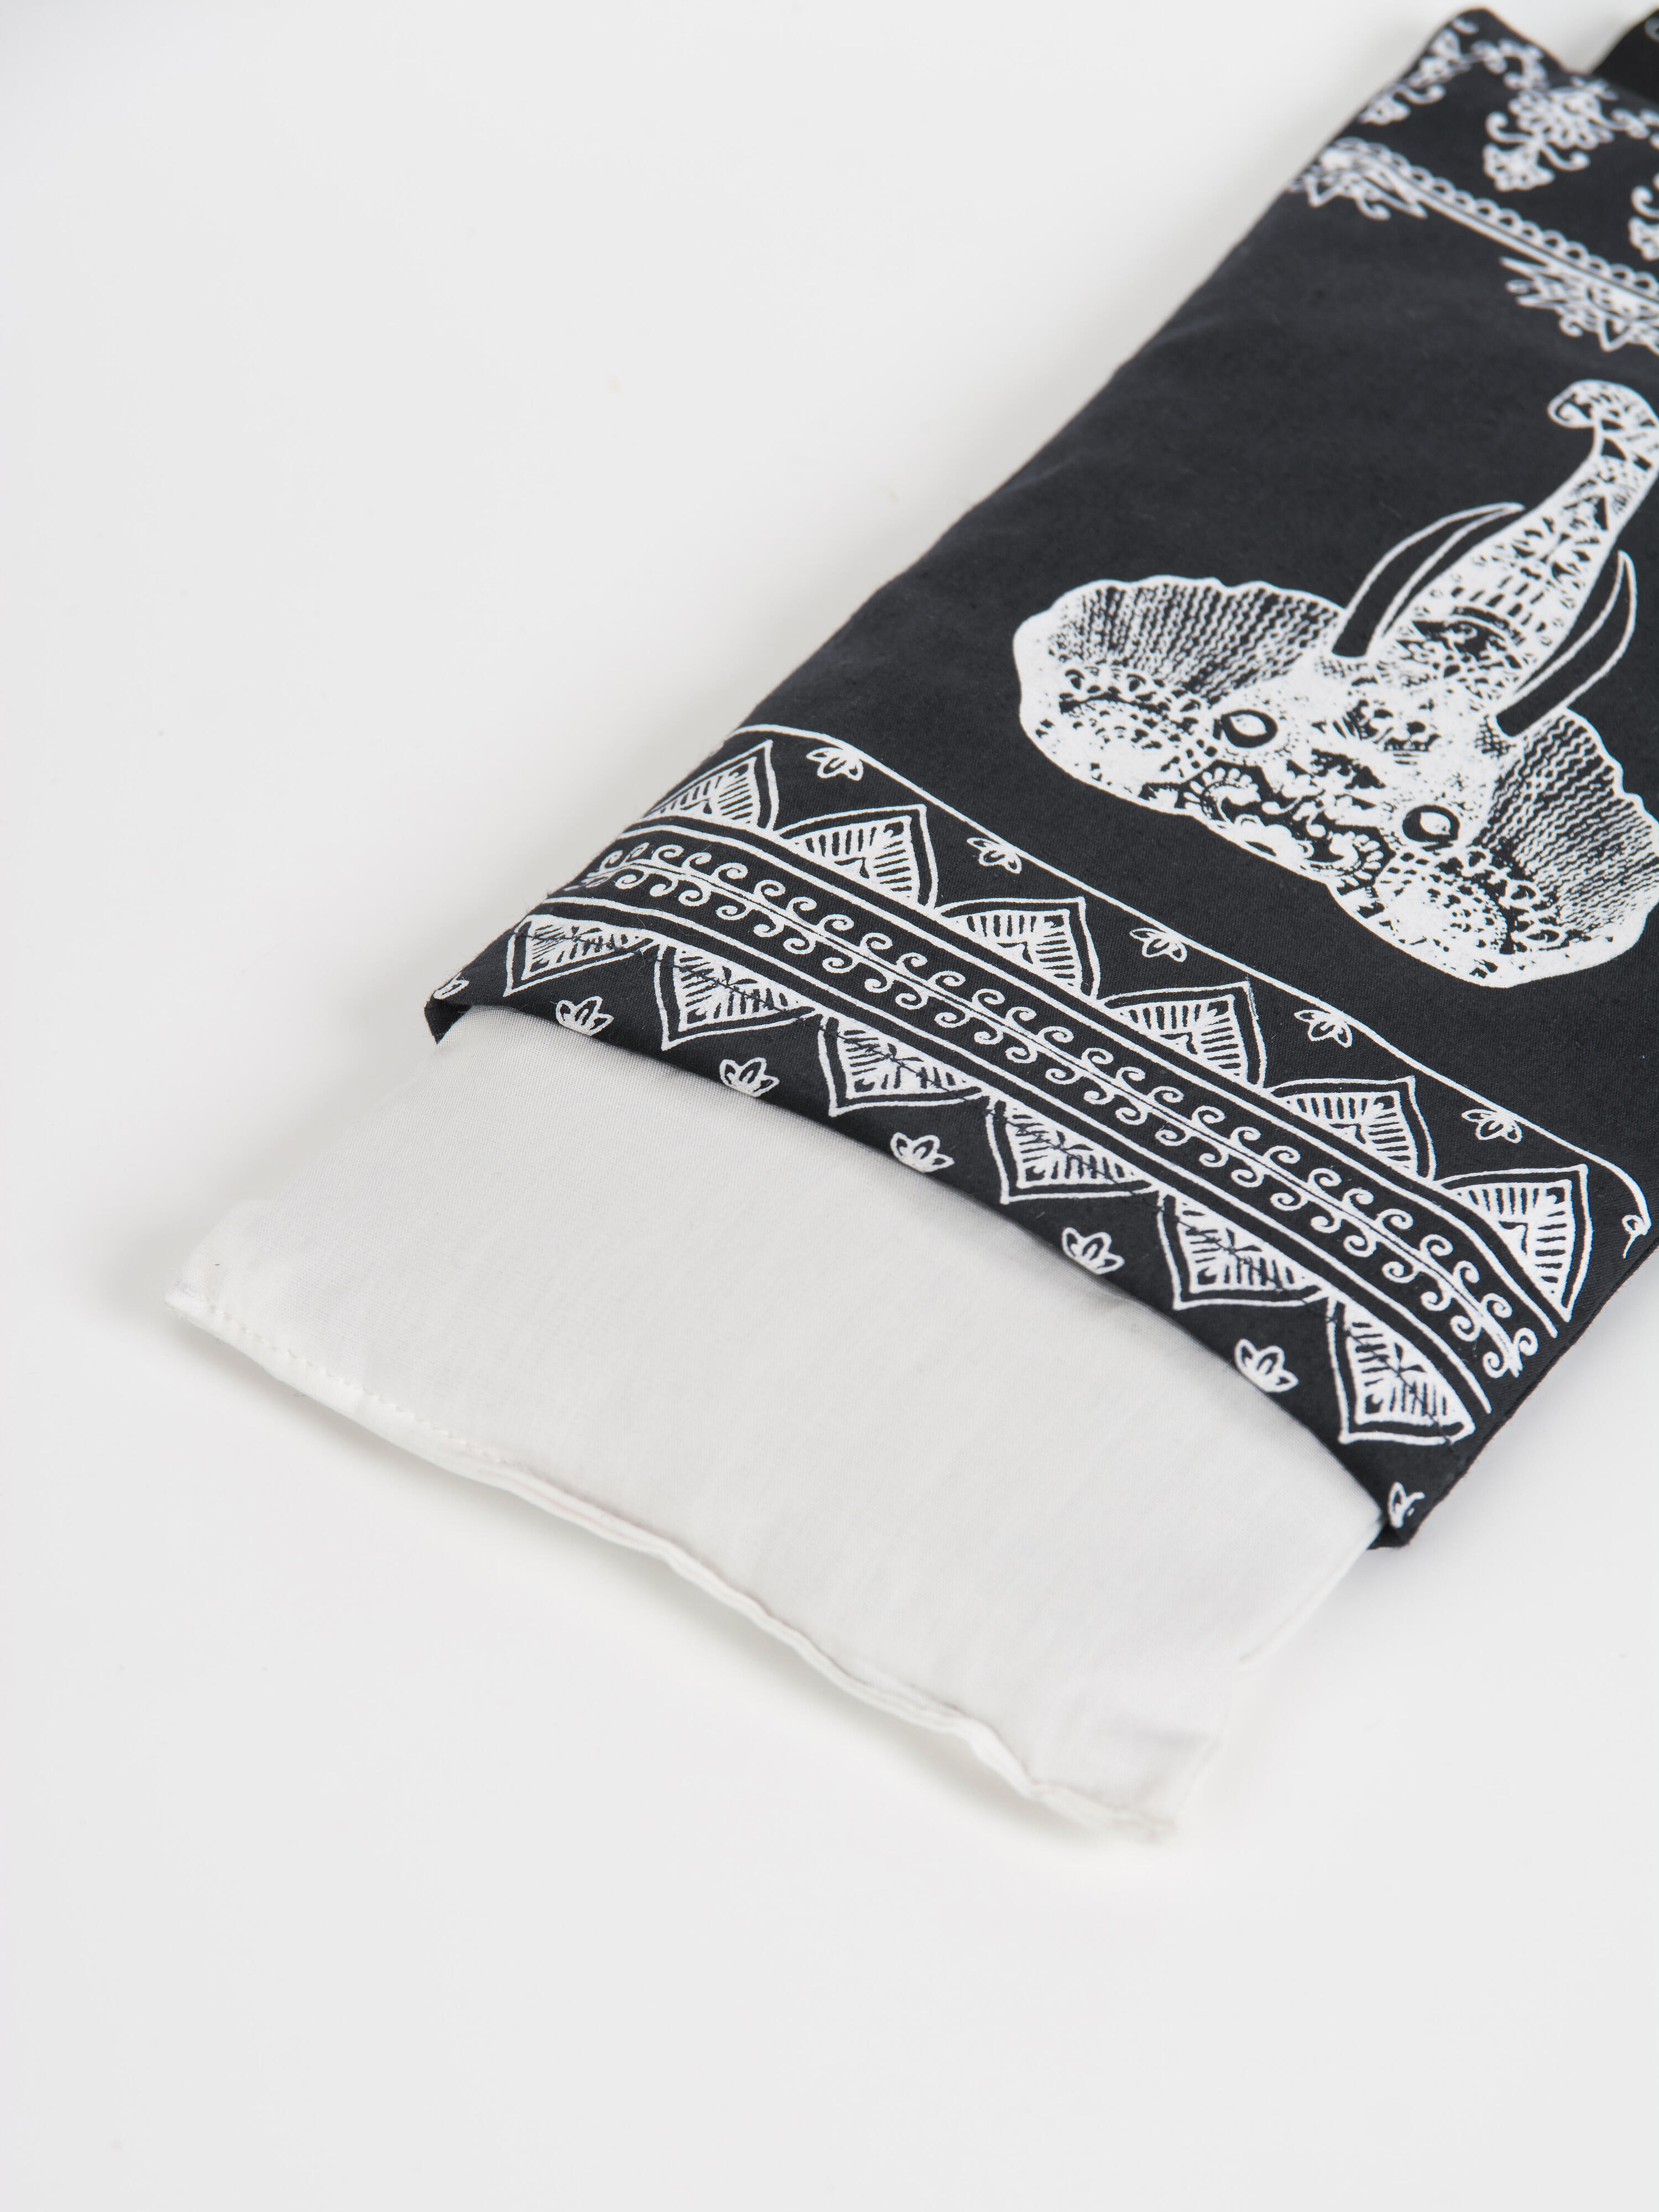 Yoga Studio Linseed Eye Pillow - Graphite Grey Aztec Elephant 2/2